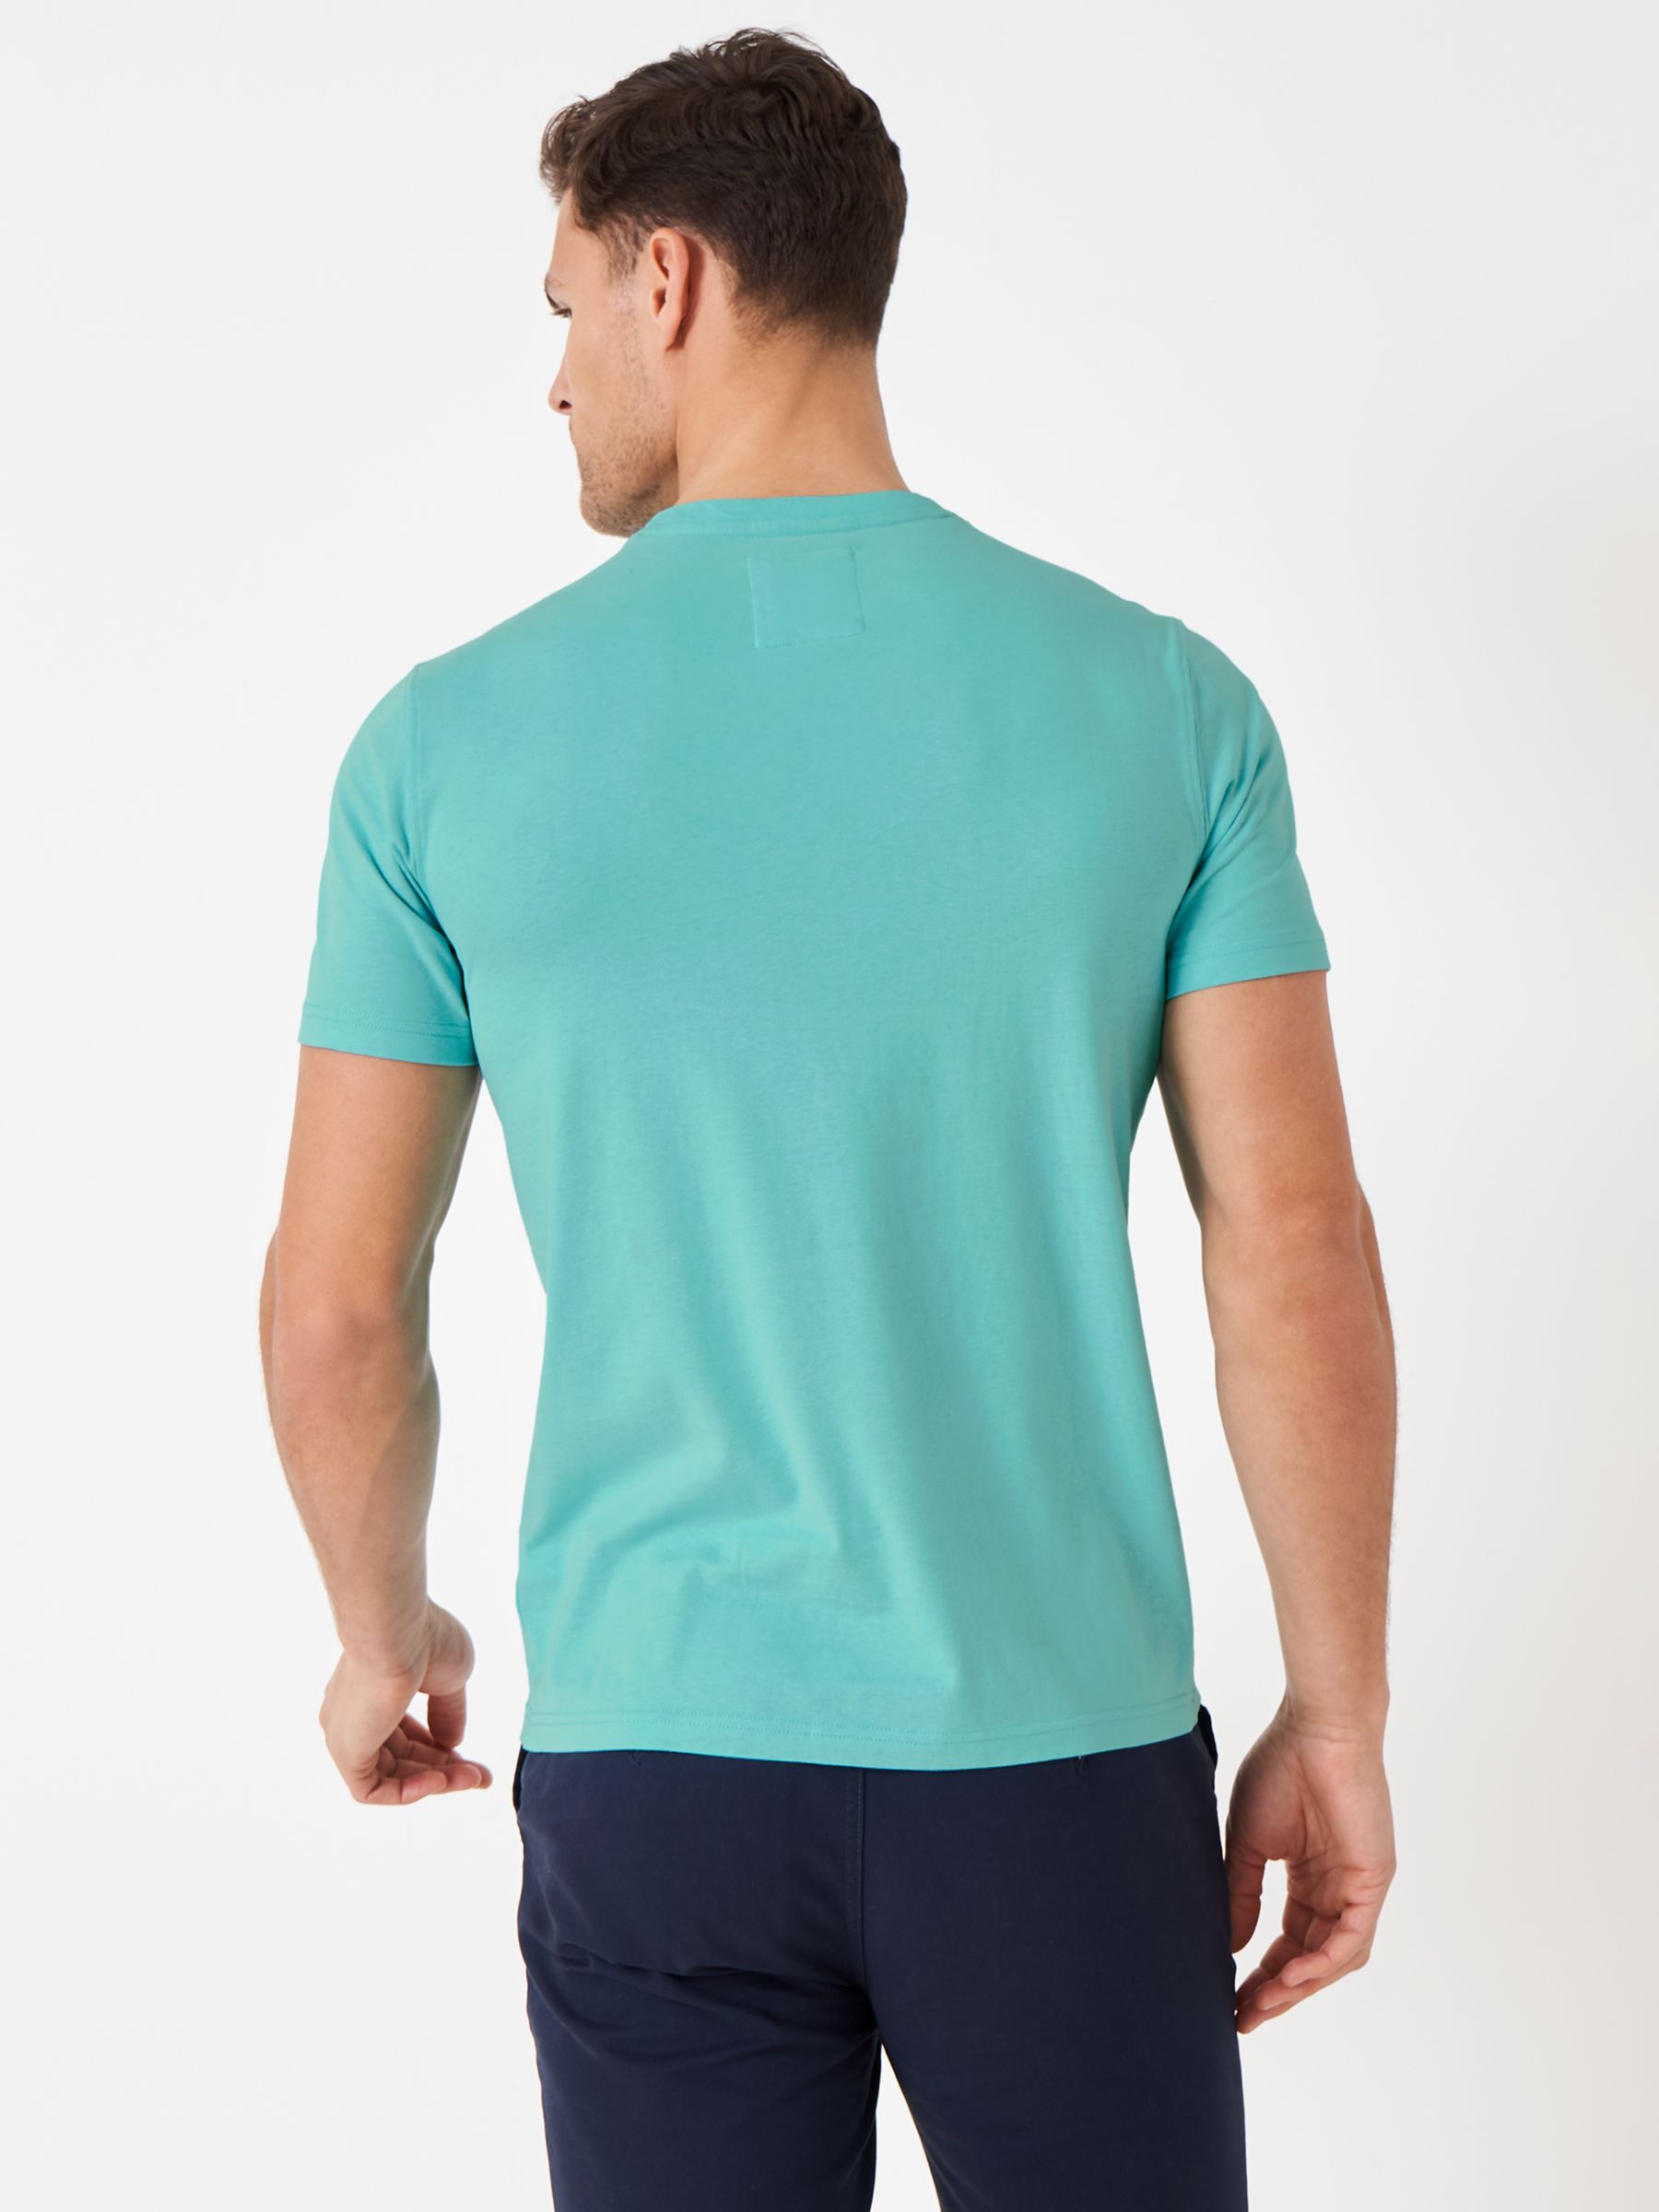 Crew Clothing Cotton T-Shirt, Aqua Blue At John Lewis & Partners